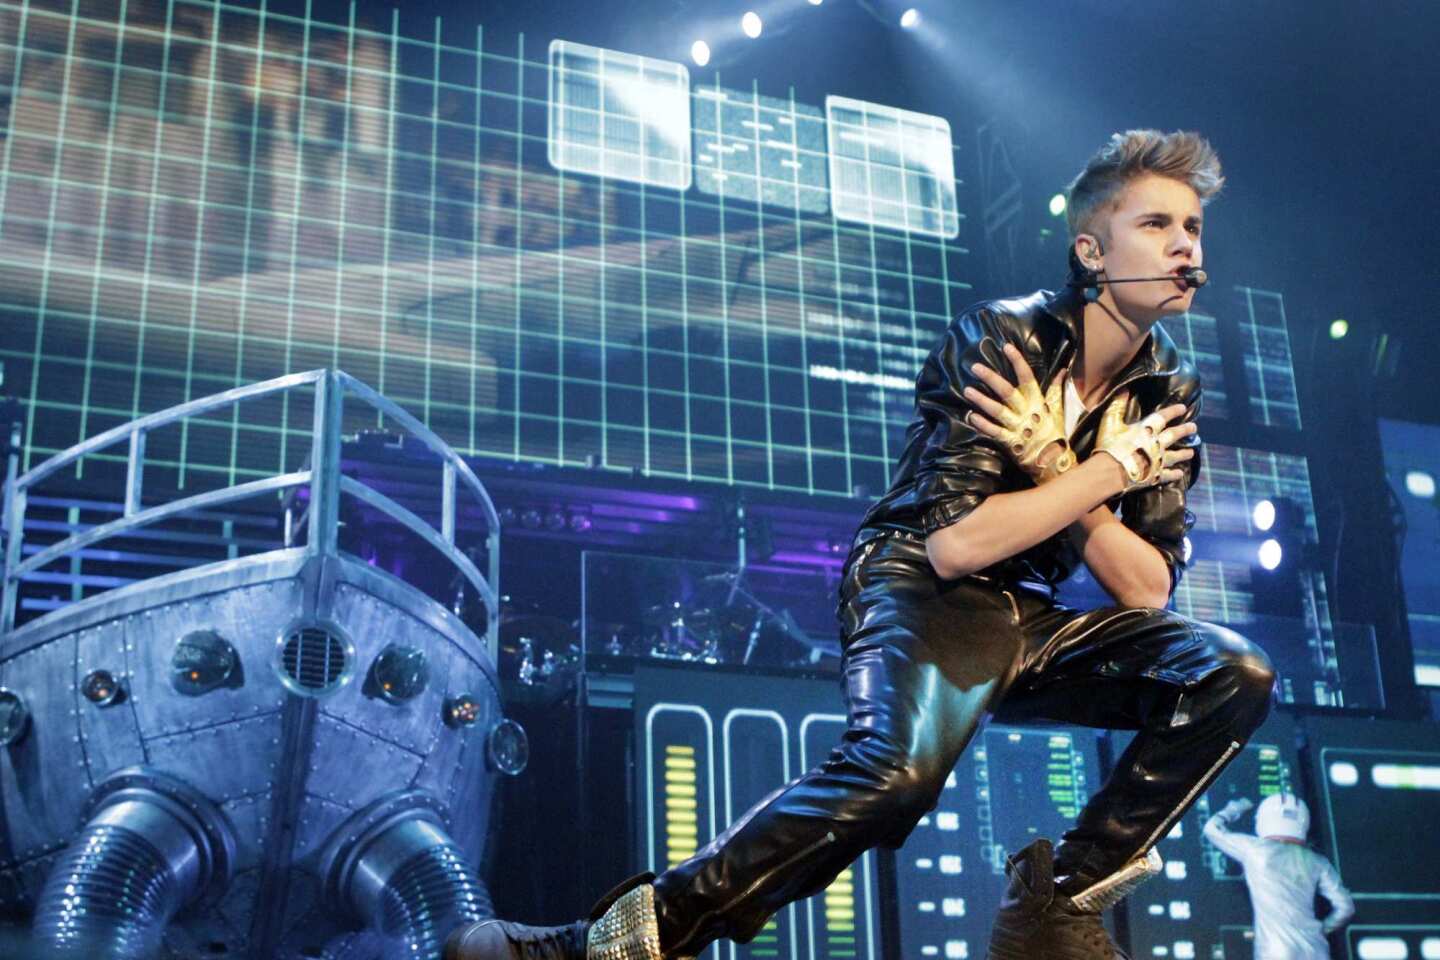 Justin Bieber concert at Staples Center